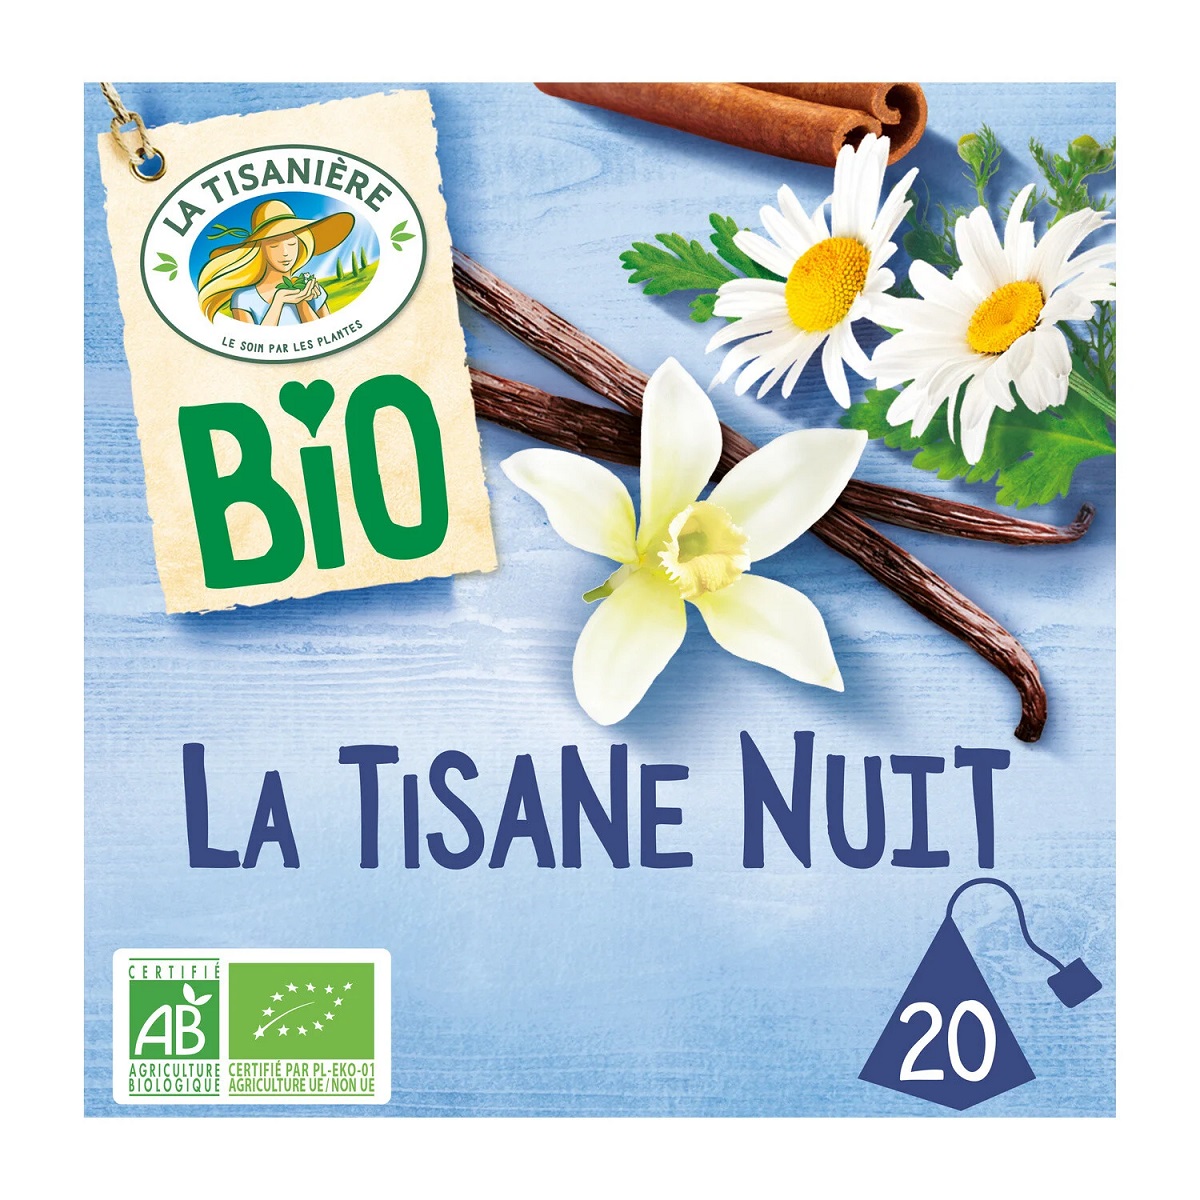 La Tisaniere Organic Night Tisane x20 sachets 30g